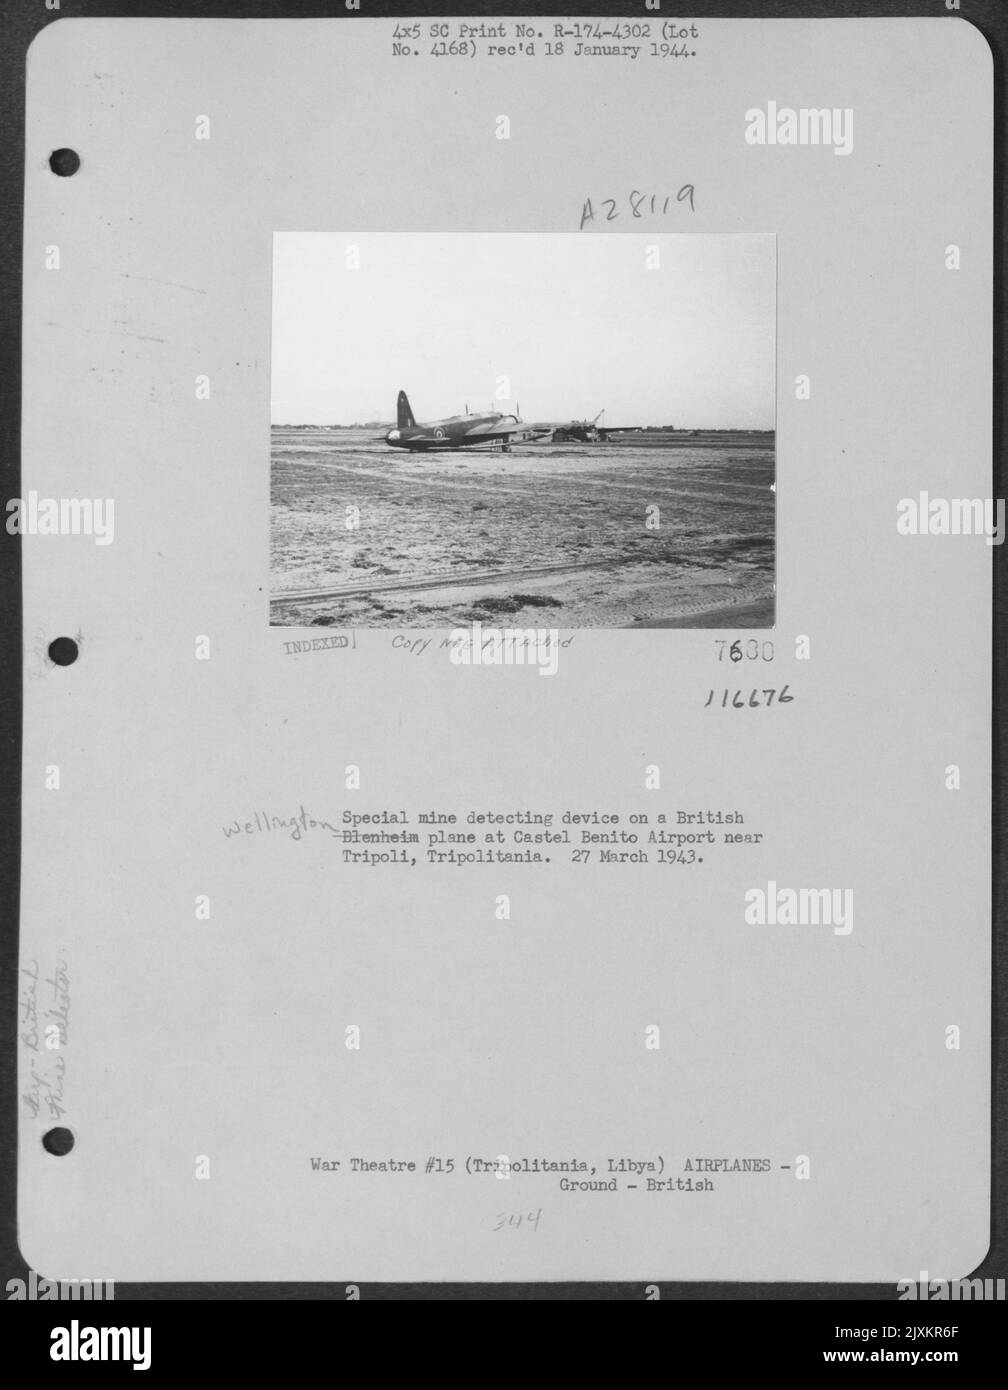 Special mine detecting device on a British Wellington plane at Castel Benito Airport near Tripoli, Tripolitania. 27 March 1943. Stock Photo